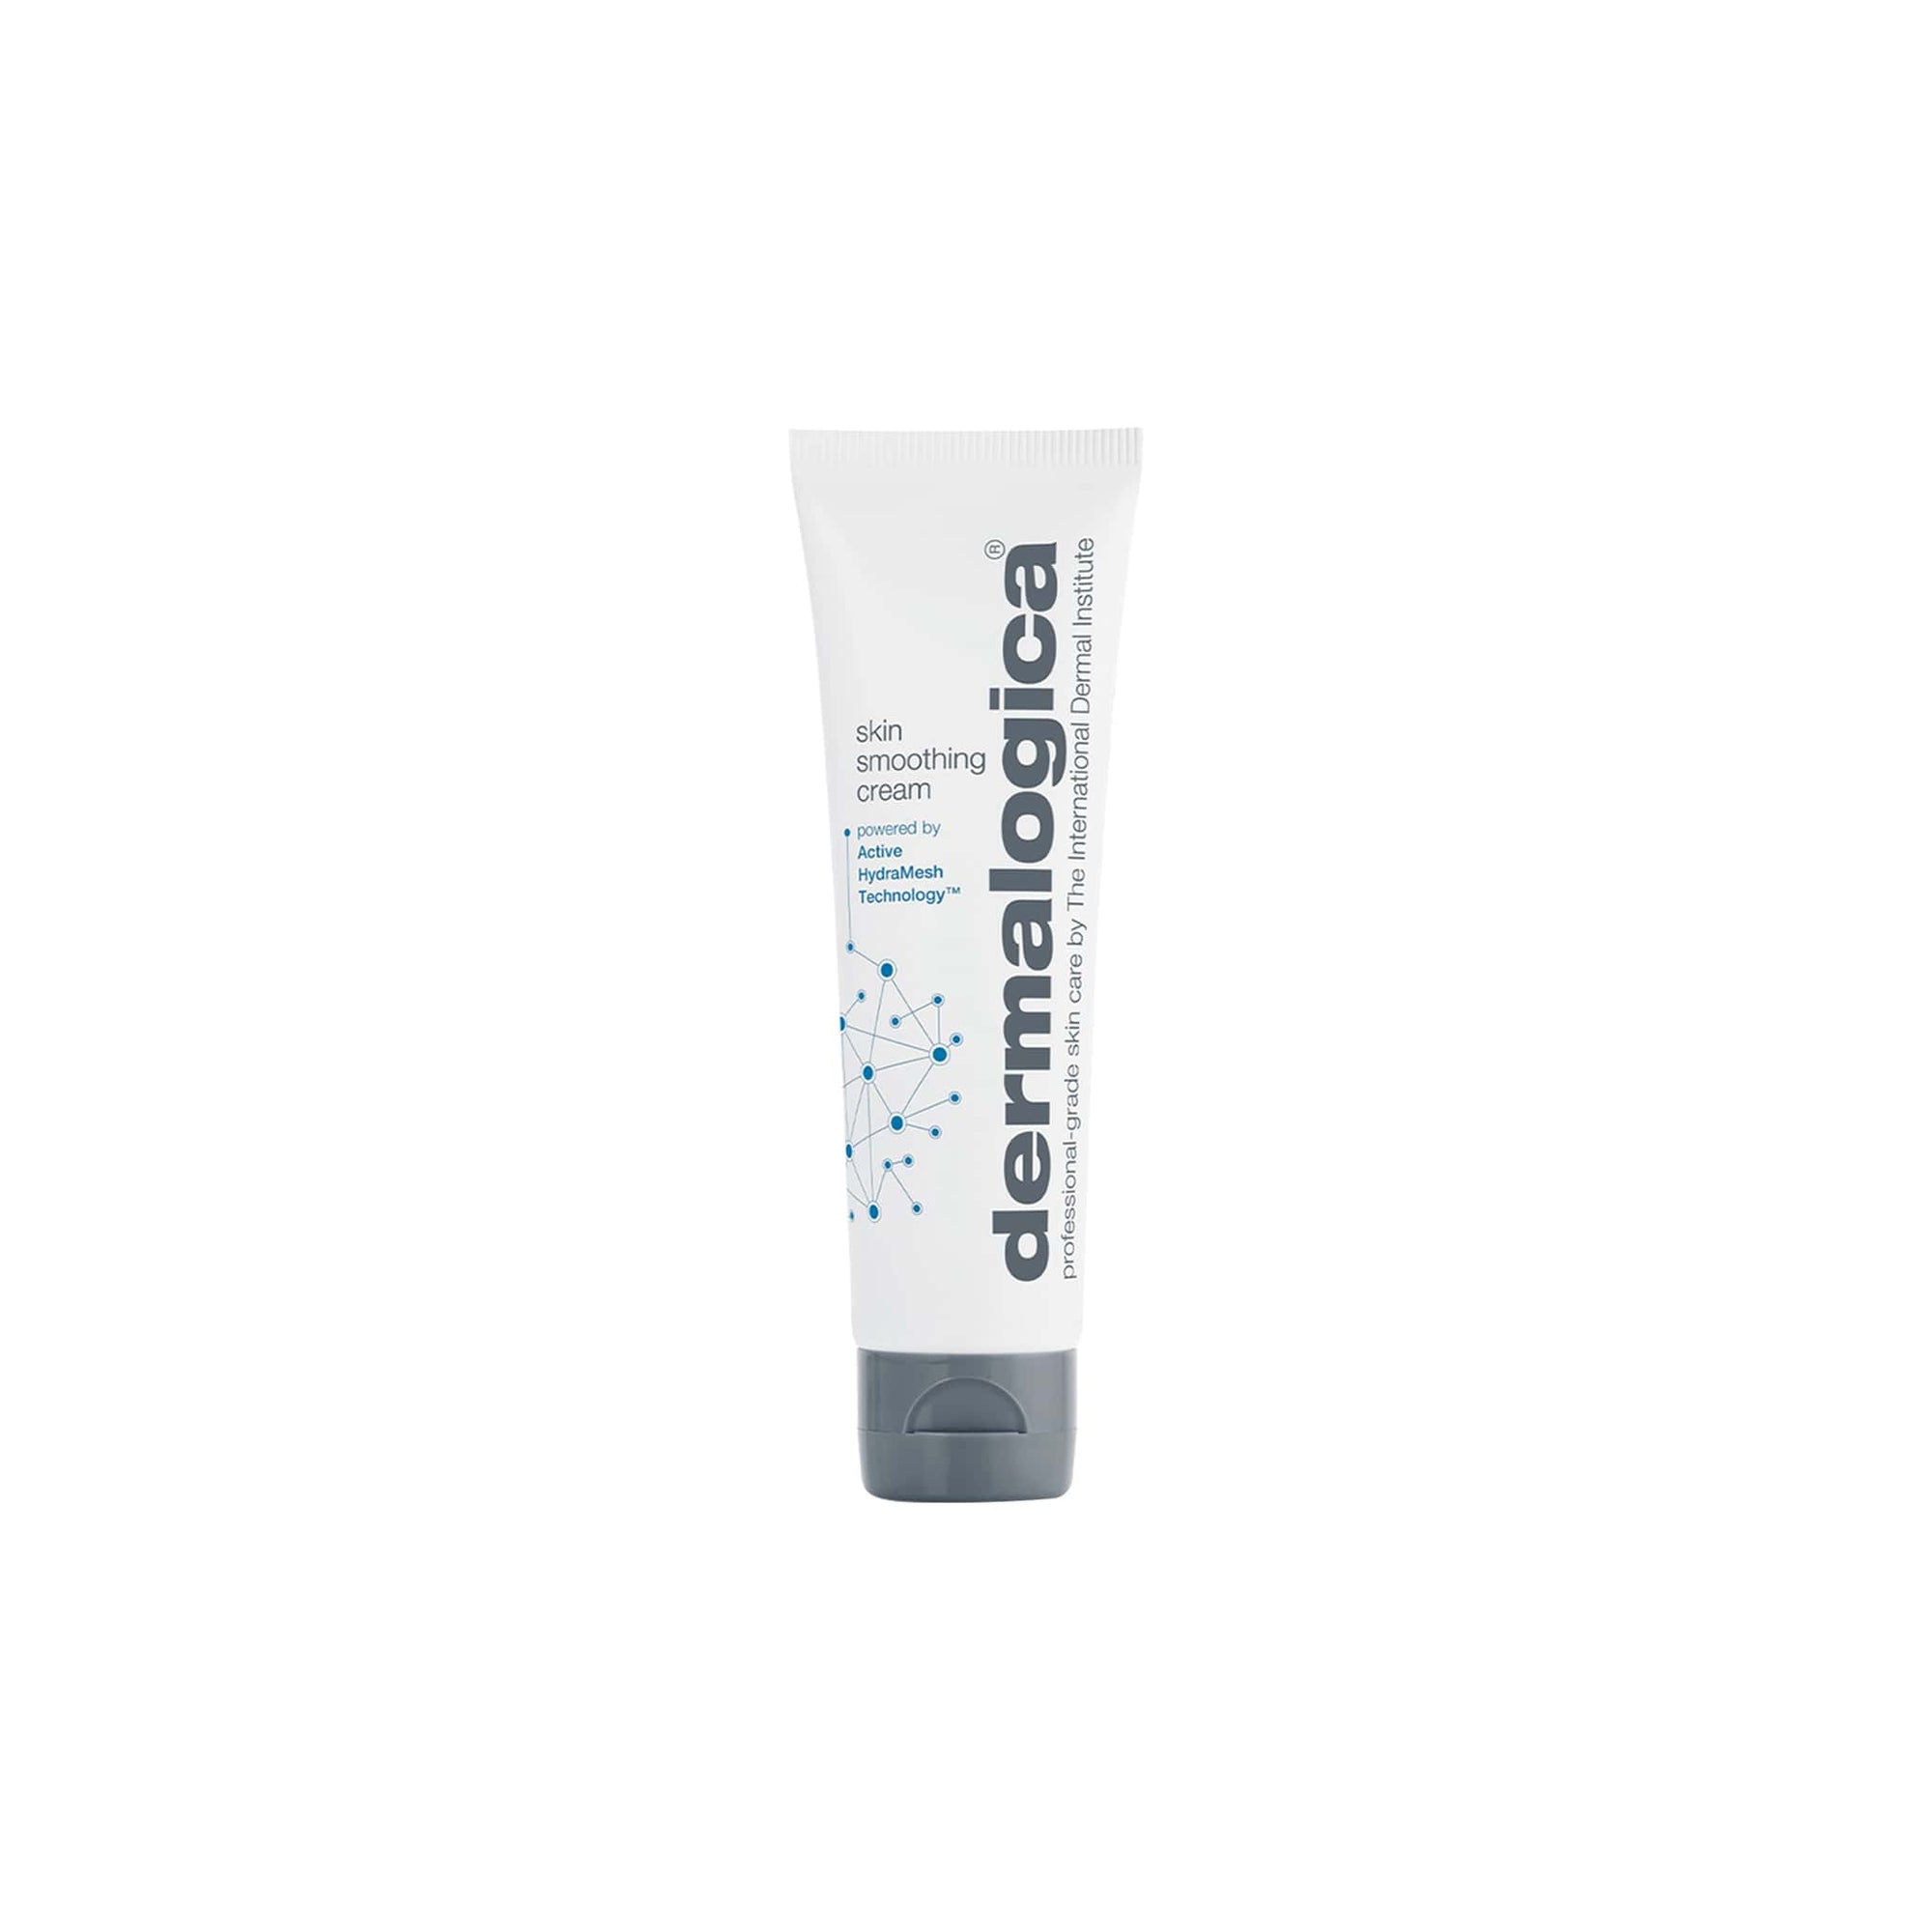 Dermalogica Skin Smoothing Cream | retailbox.co.za